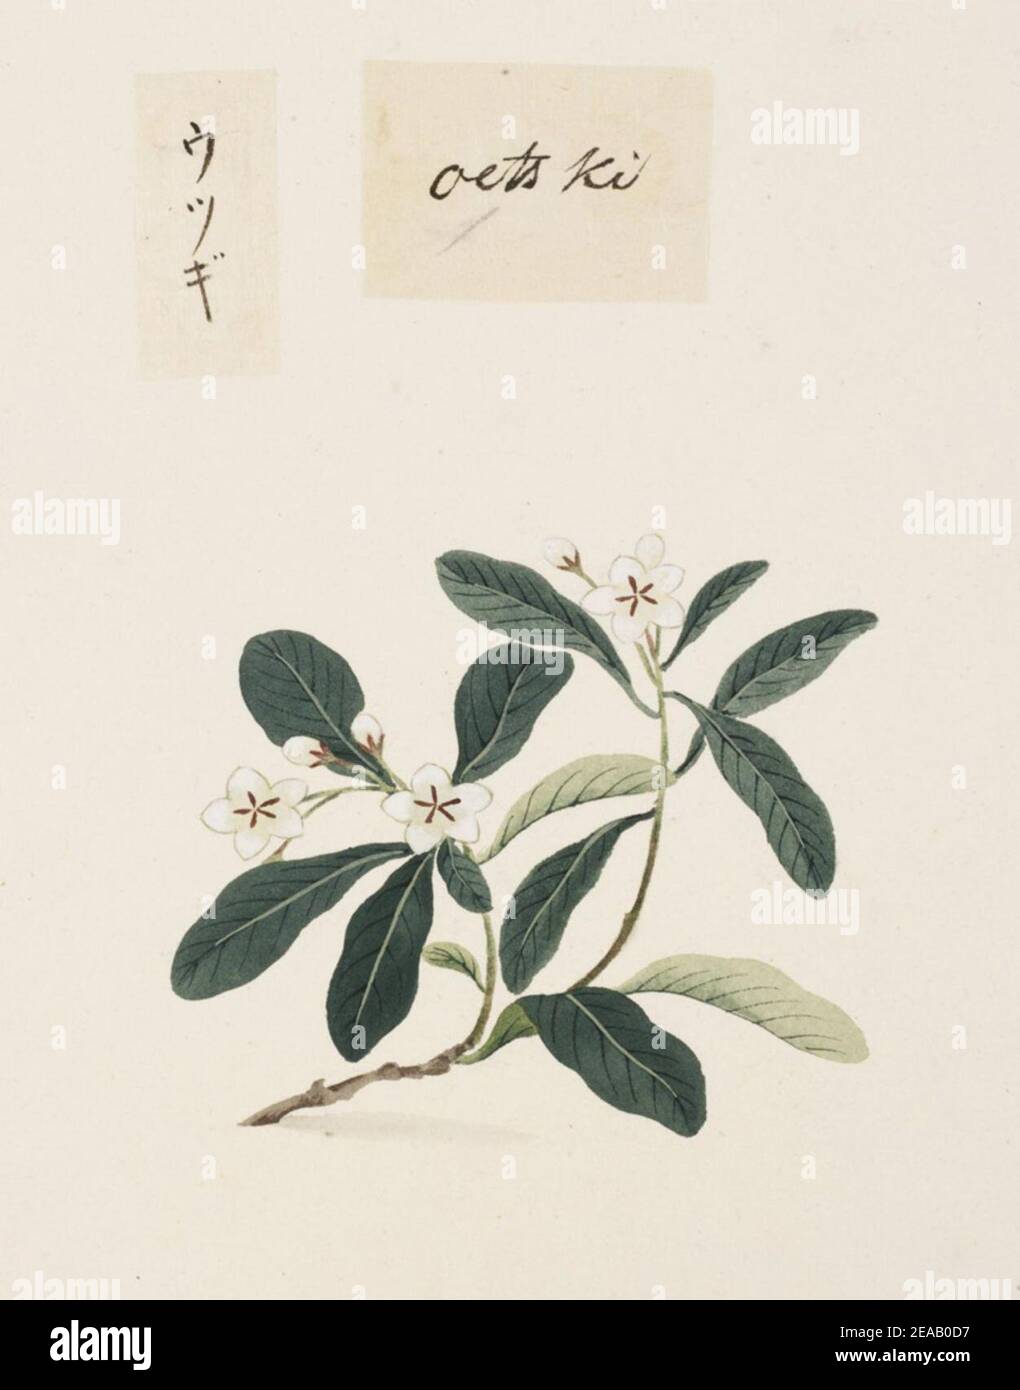 .838 - Deutzia crenata Sieb. et Zucc. - Kawahara Keiga - 1823 - 1829 - pencil drawing - water colour. Stock Photo